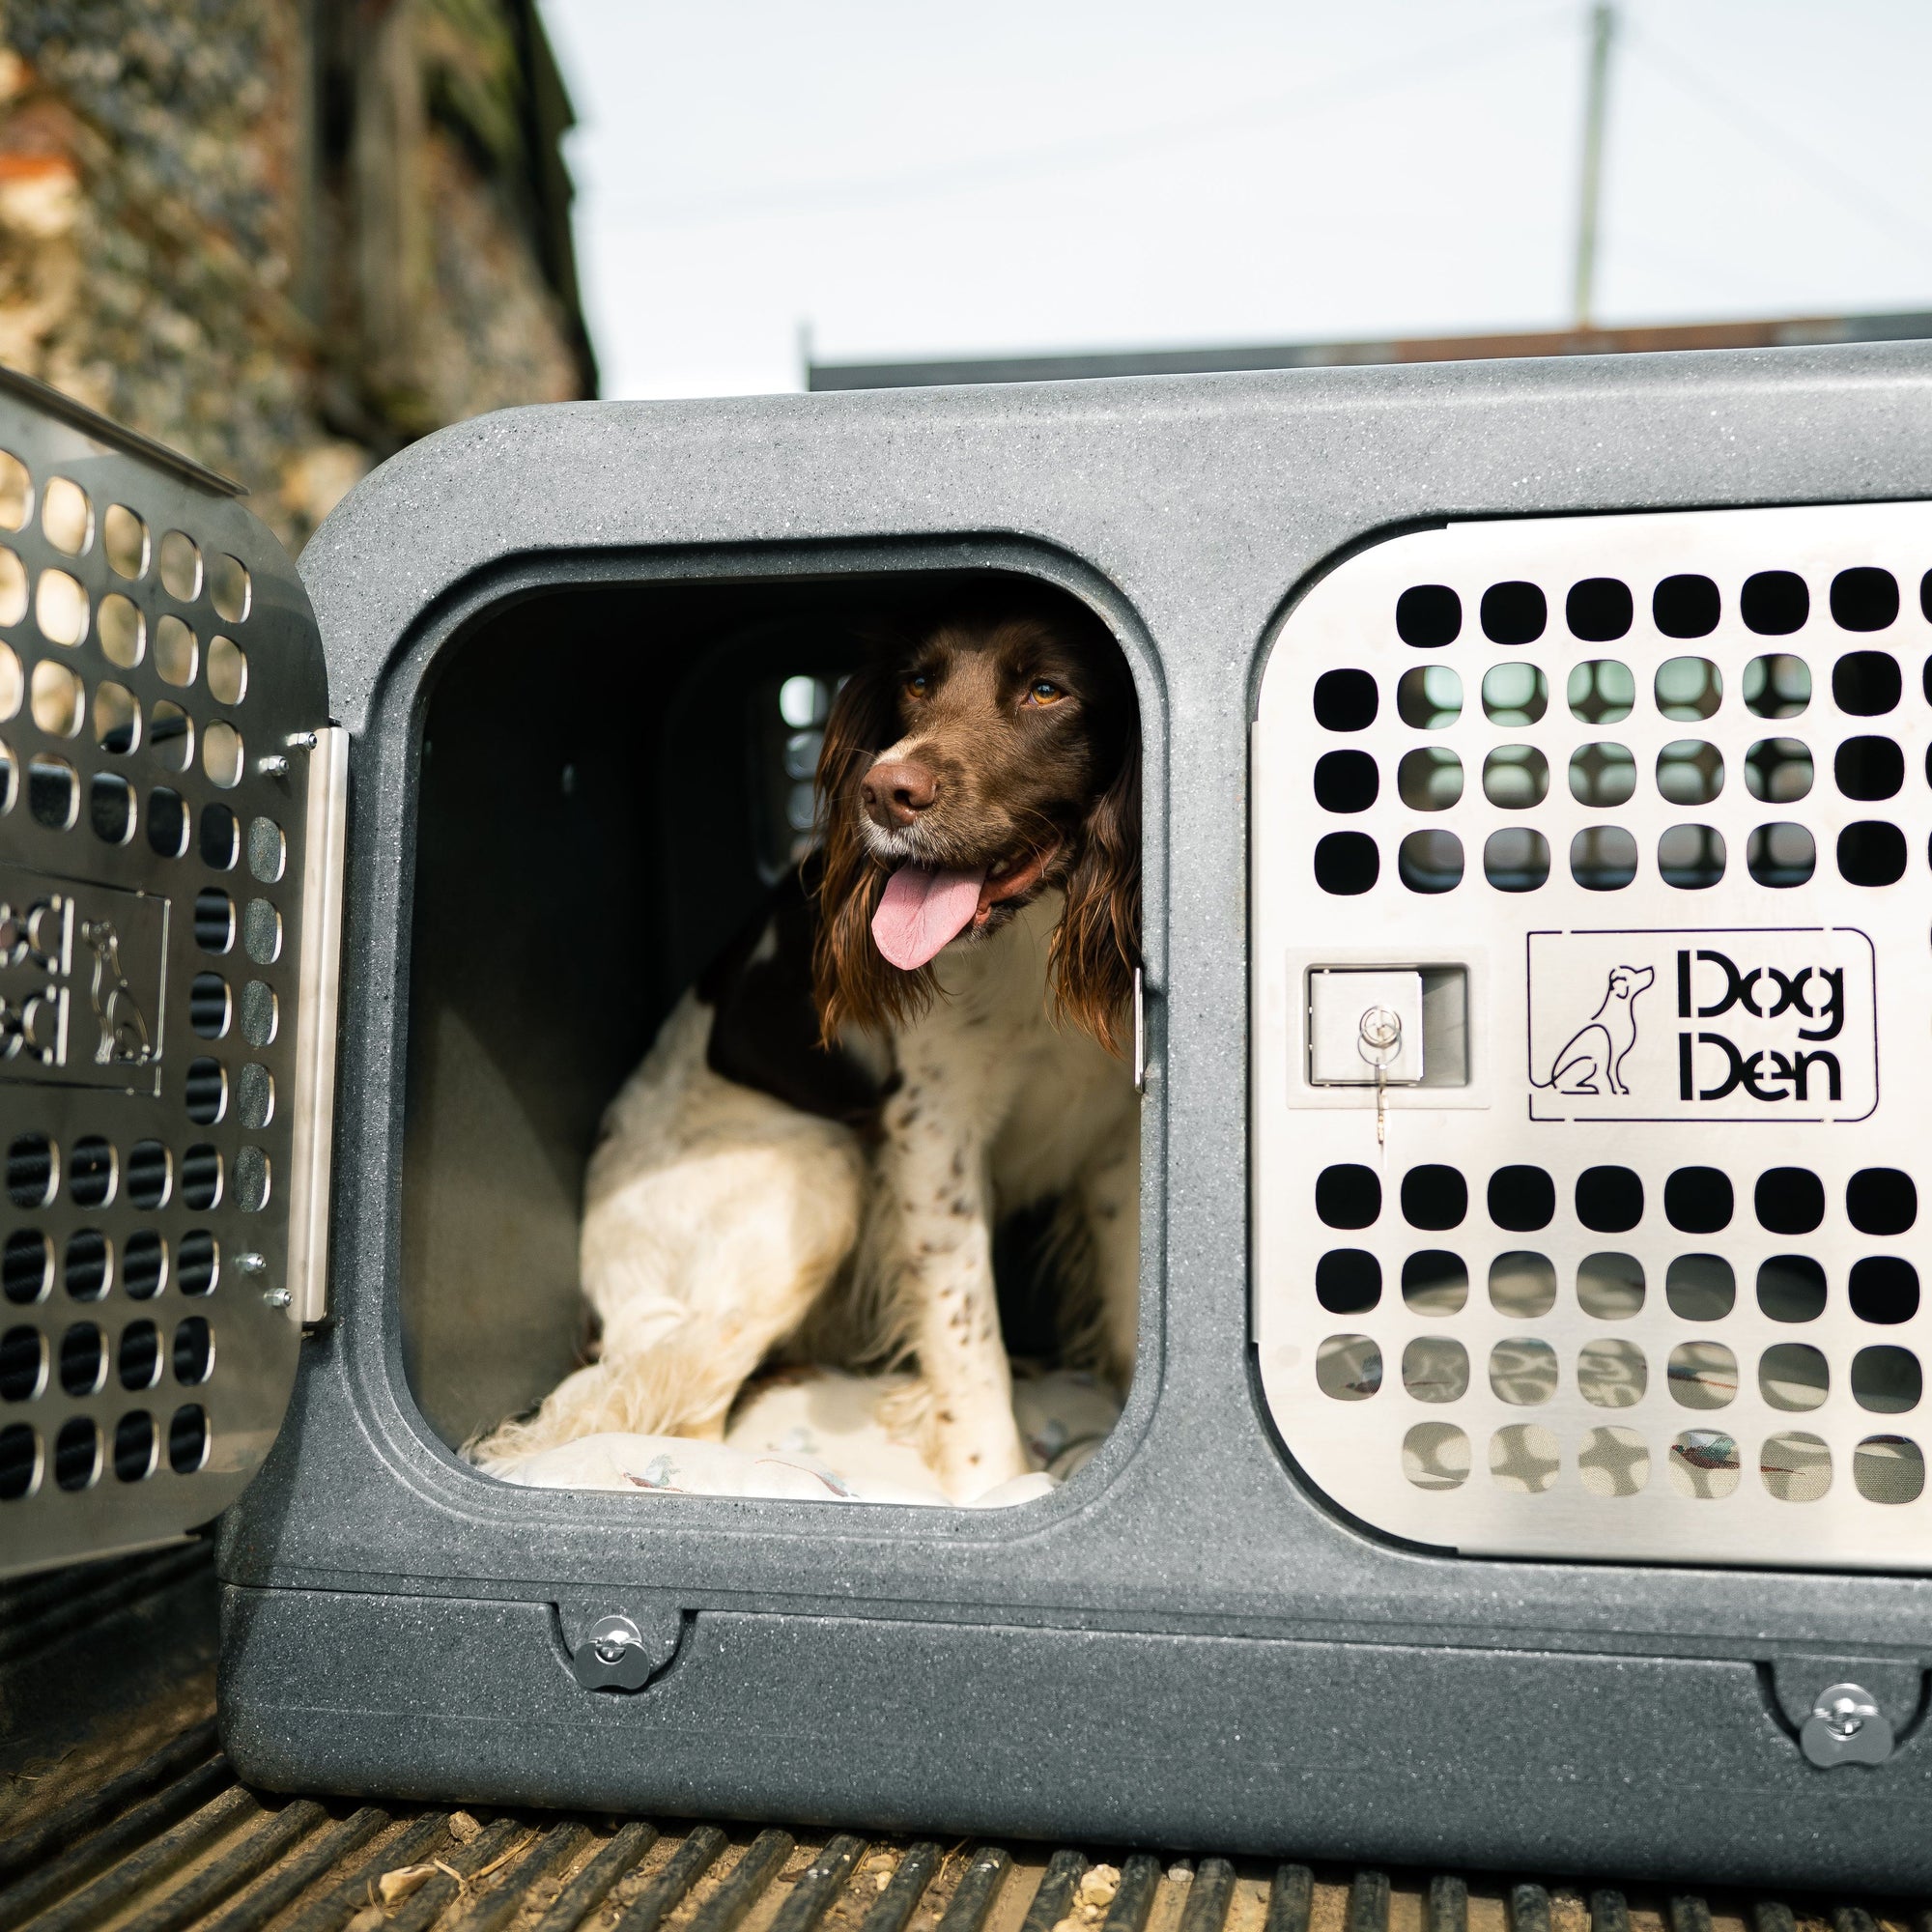 springer spaniel inside the dog den strapped to an old ford pick-up truck